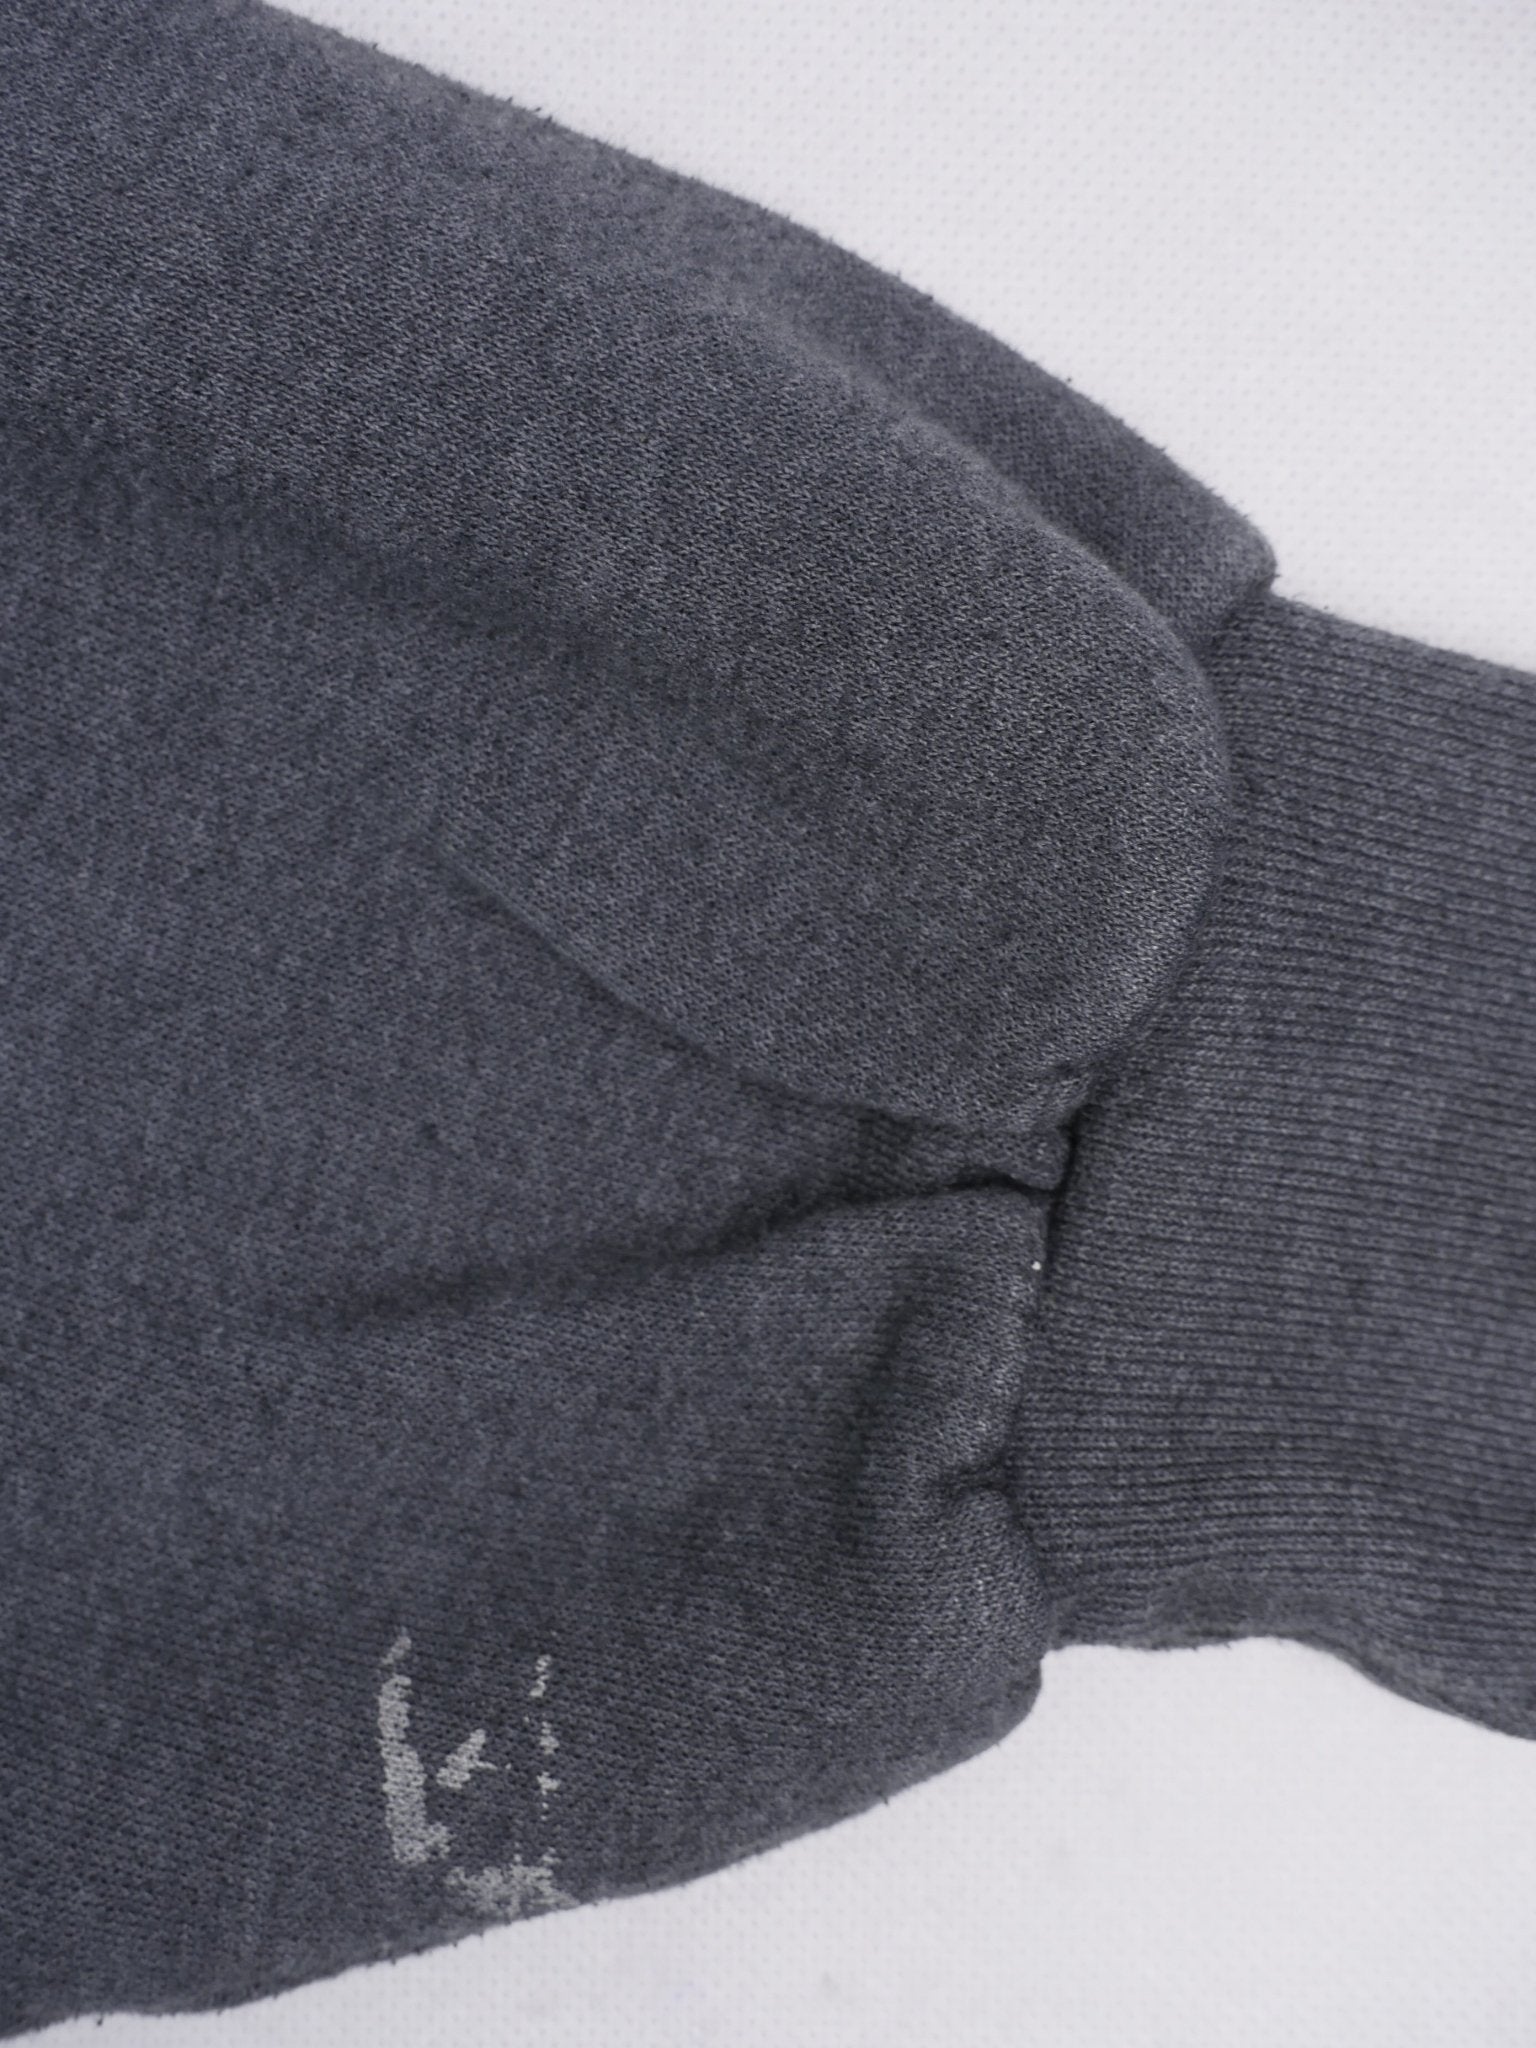 'Eagle' printed Graphic grey Vintage Sweater - Peeces